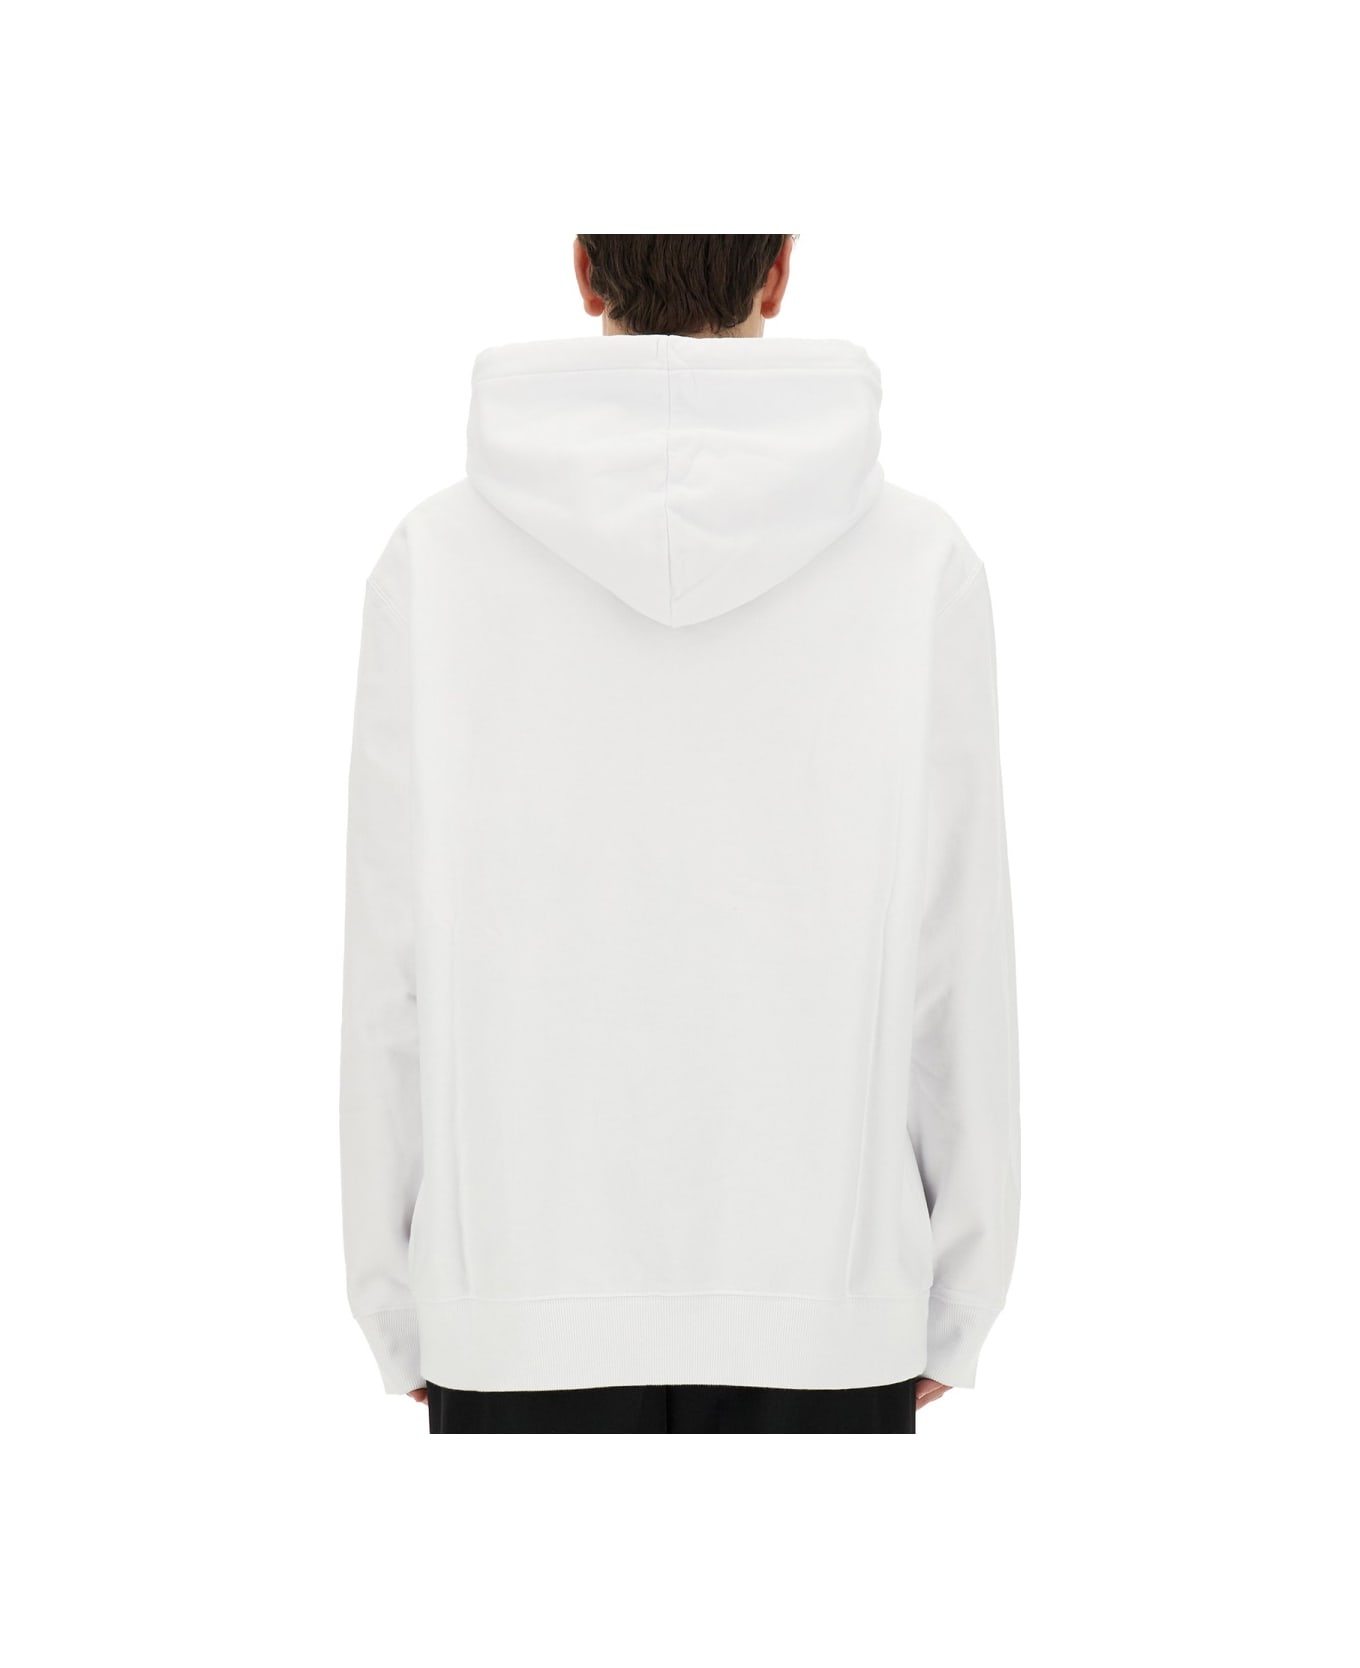 Lanvin Sweatshirt With Logo - WHITE フリース